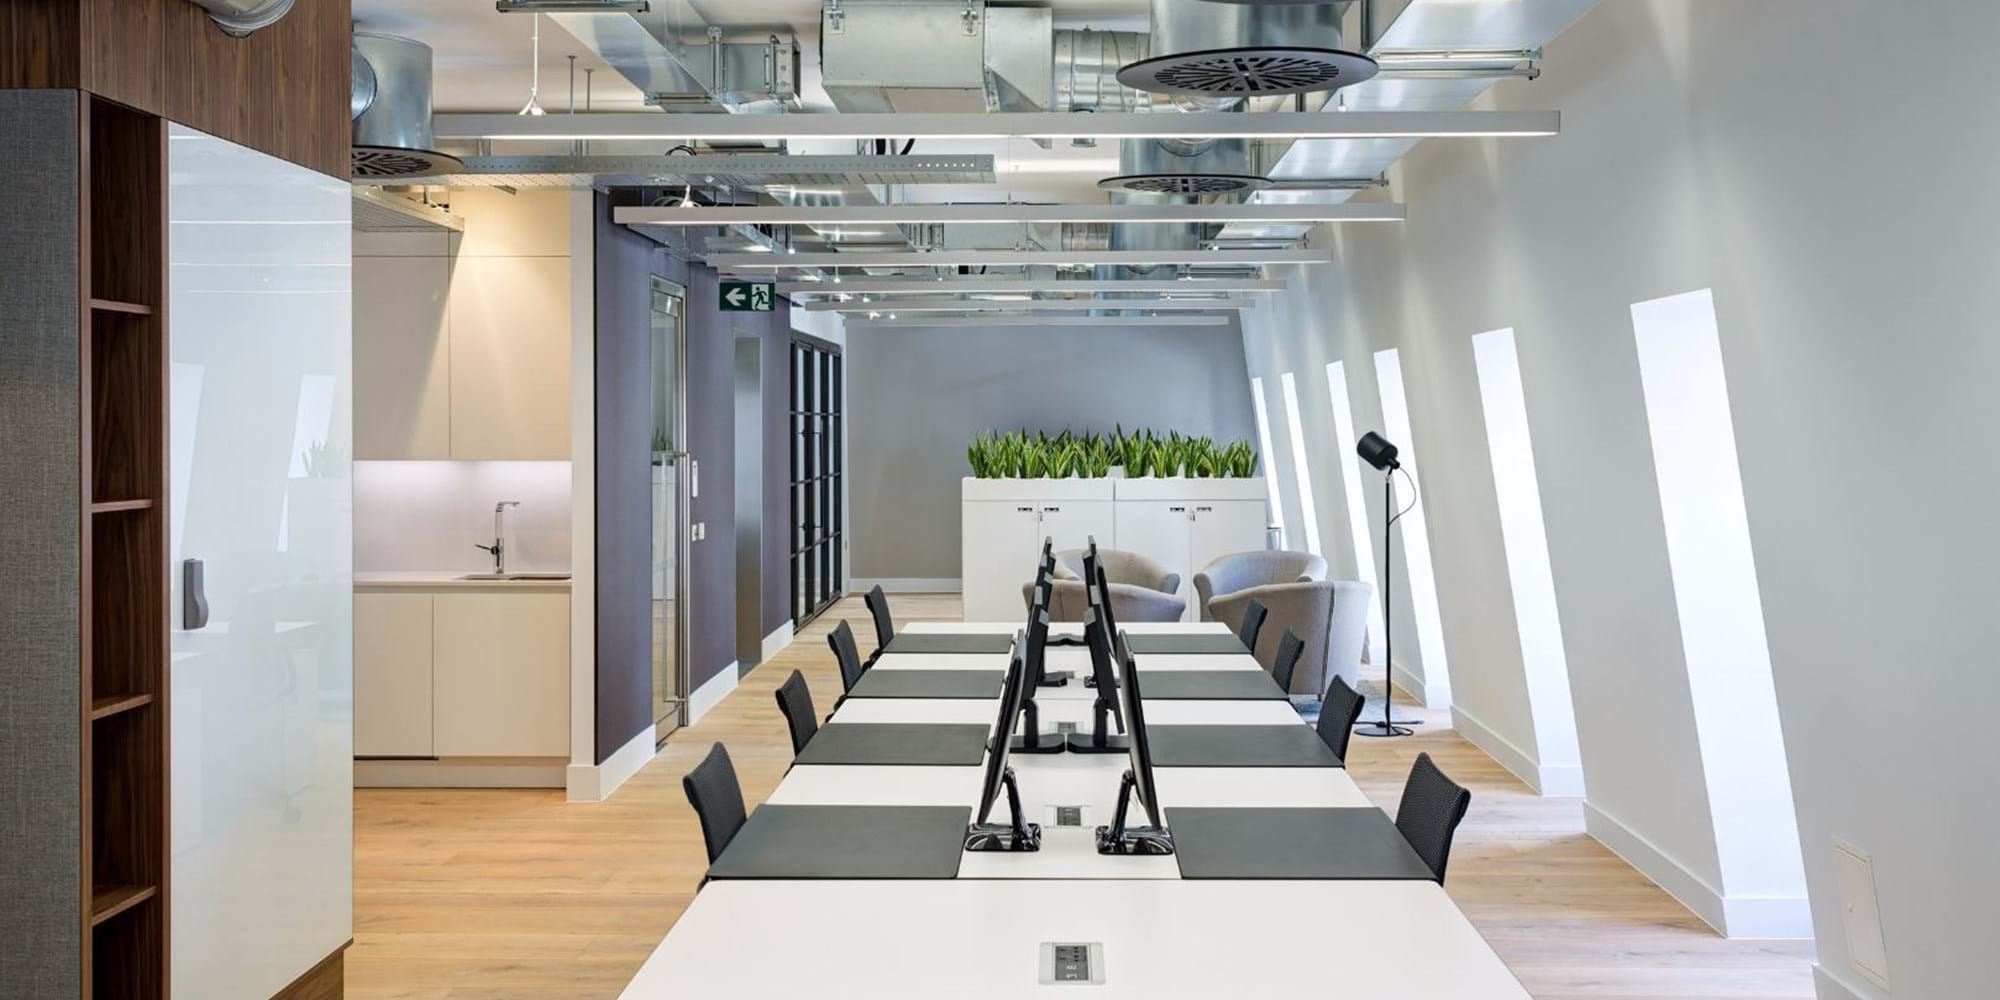 Modus Workspace office design, fit out and refurbishment - Craigewan - Graigewan 11 highres sRGB.jpg